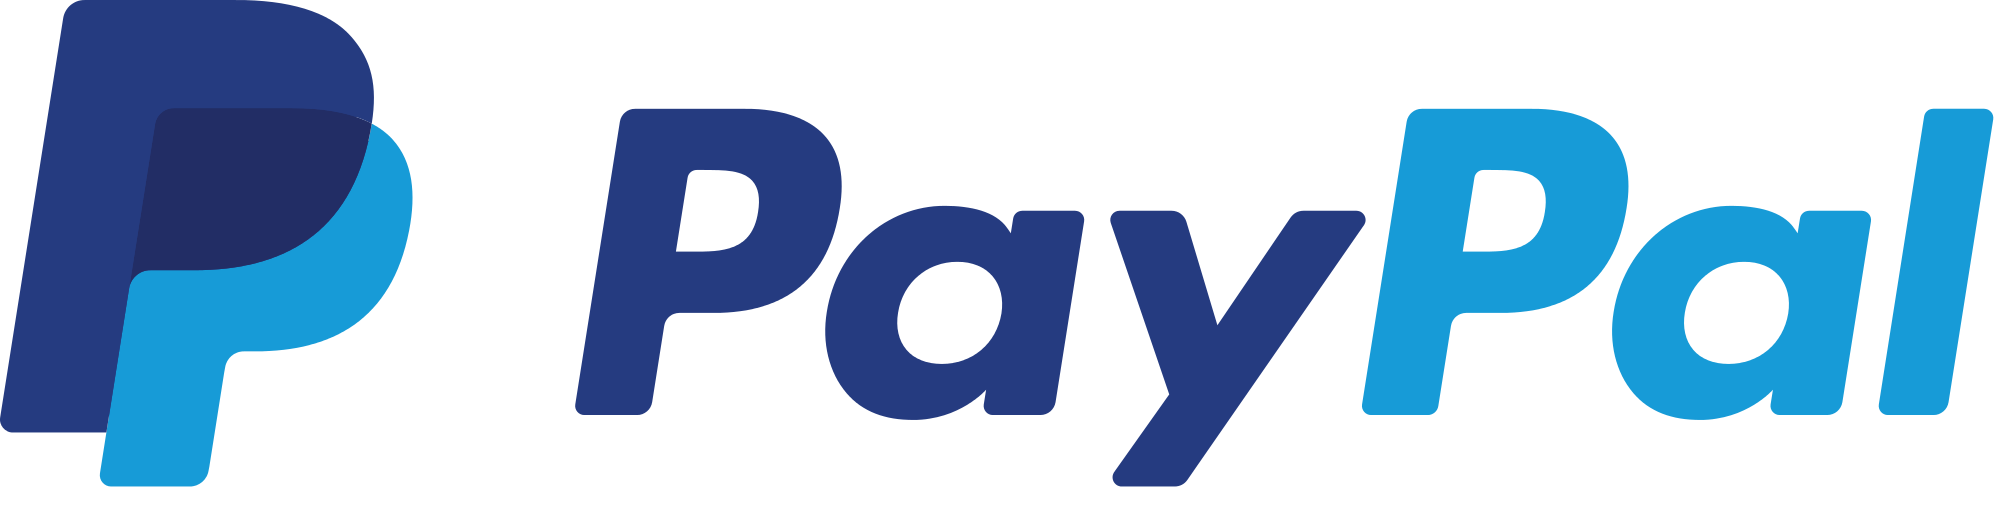 PayPal.com